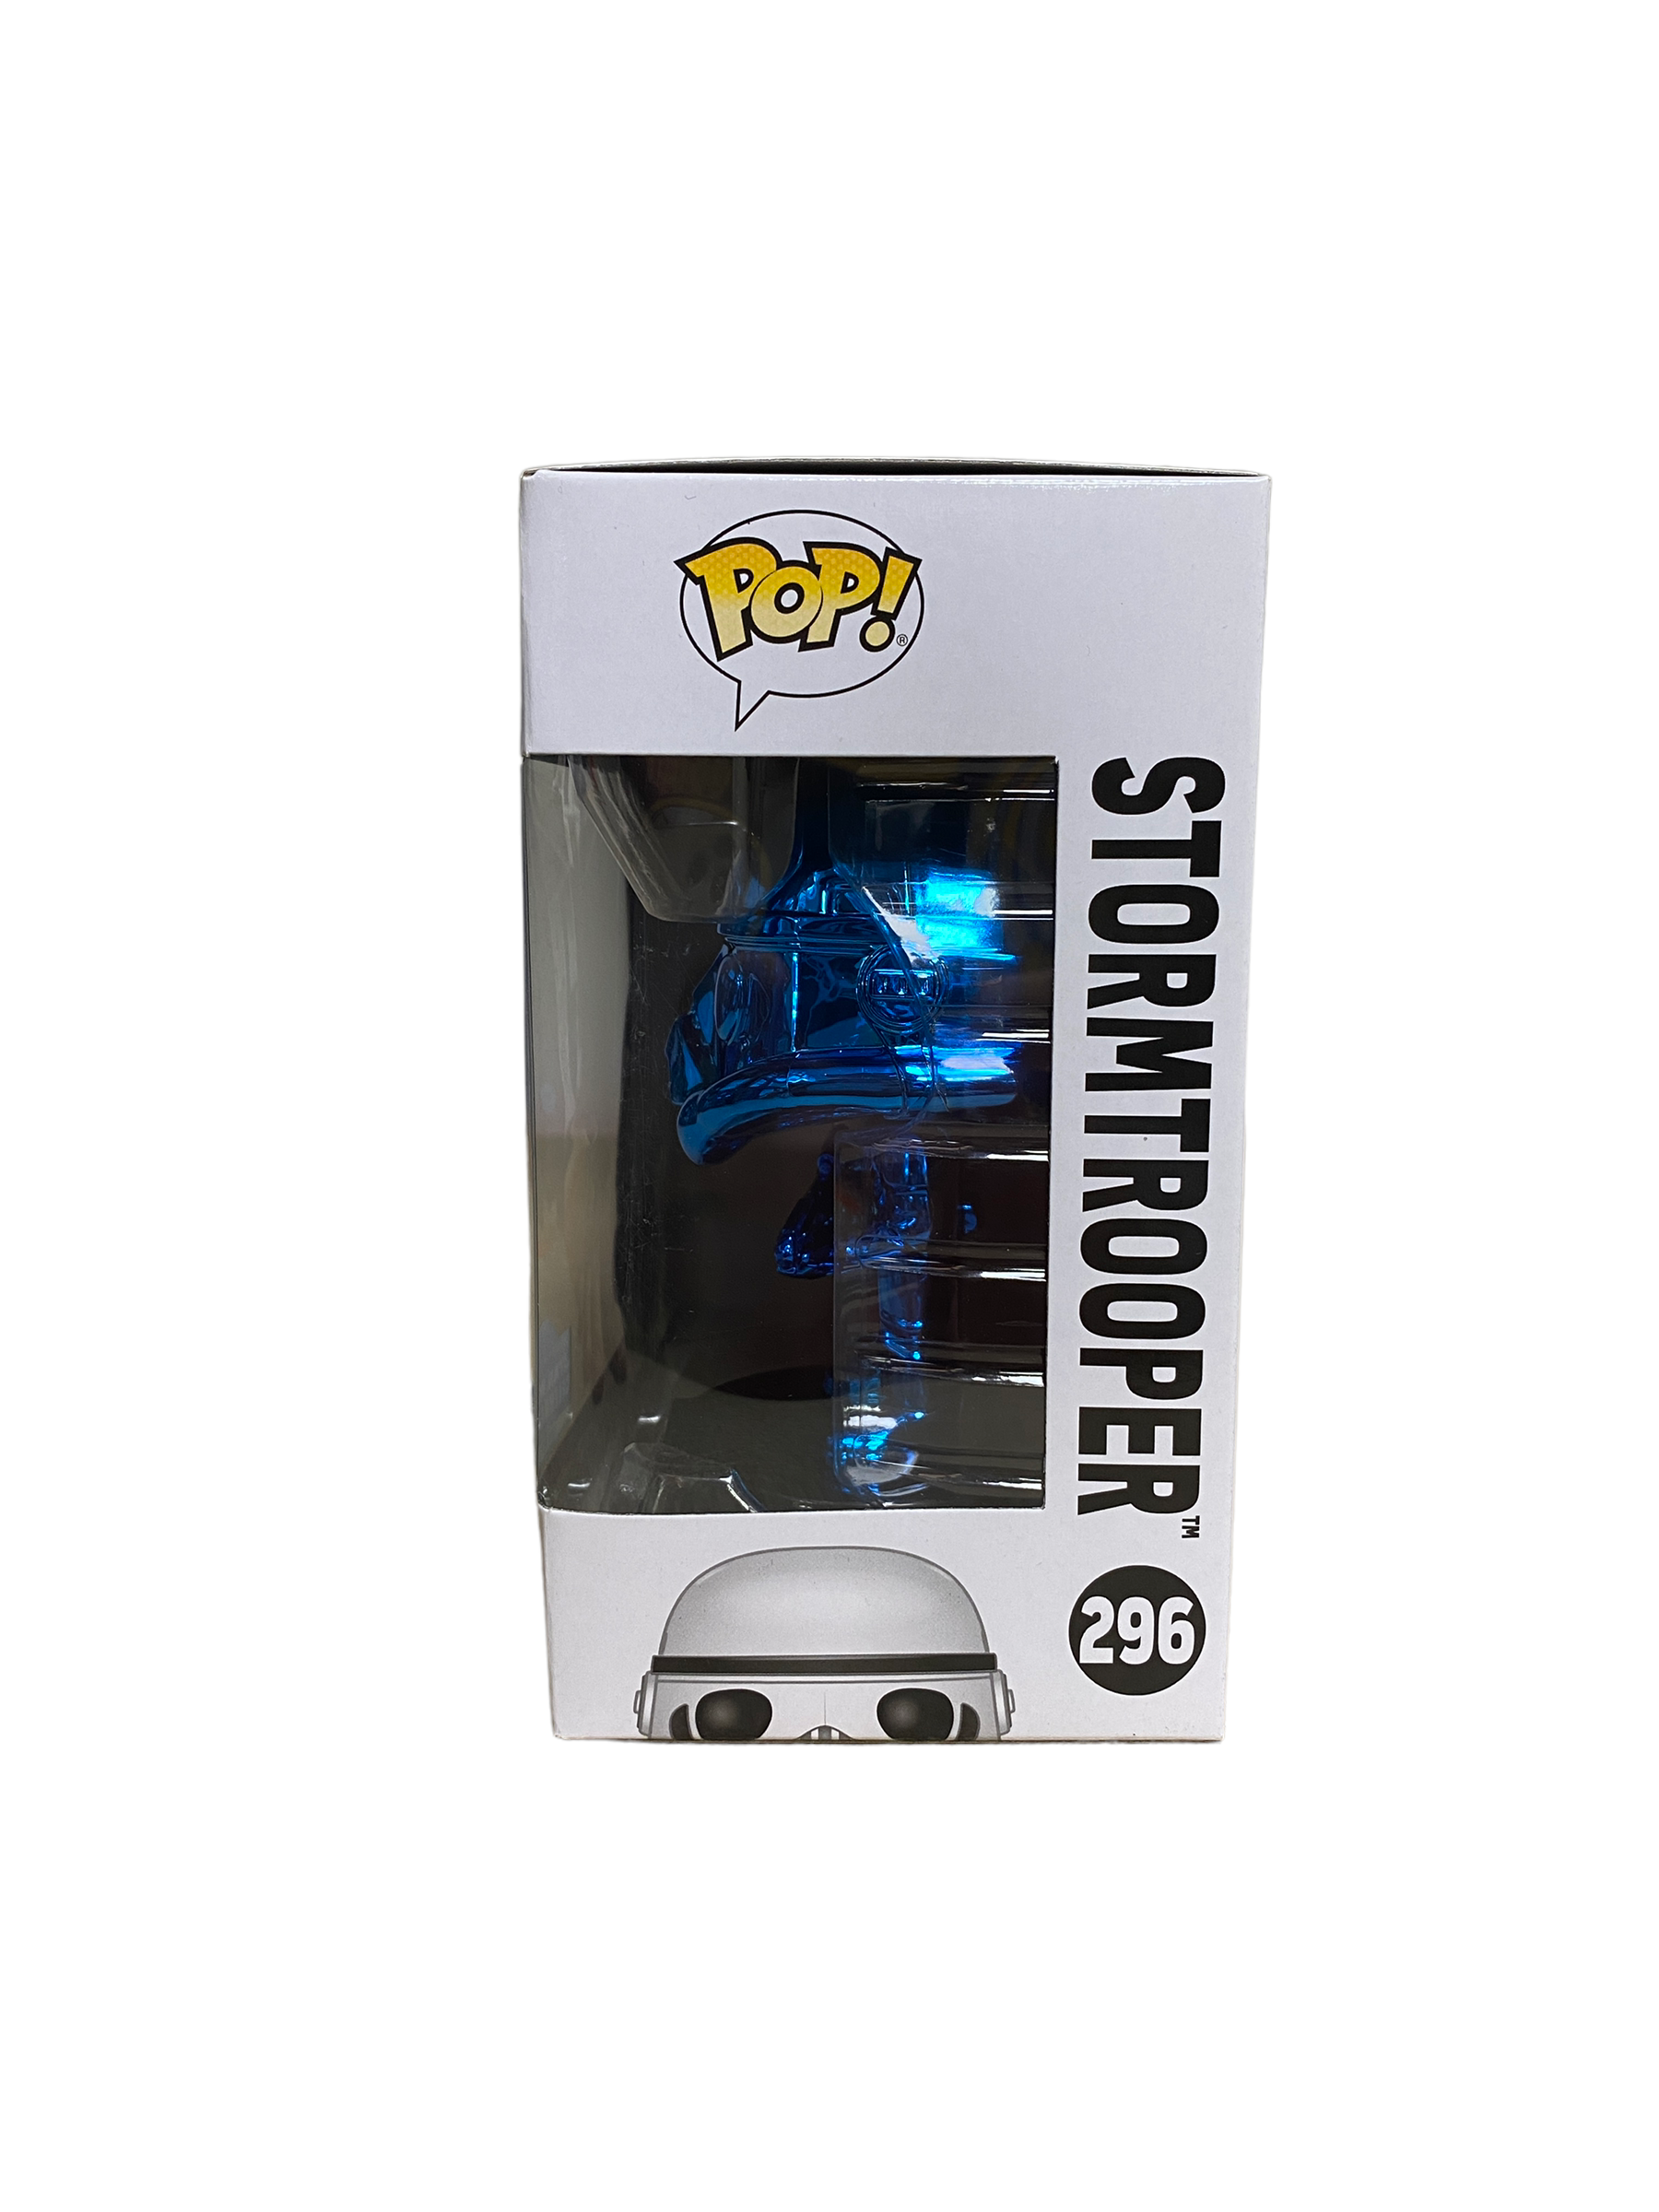 Stormtrooper #296 (Blue Chrome) Funko Pop! - Star Wars - Chicago 2019 Star Wars Celebration Exclusive LE2500 Pcs - Condition 8.5/10